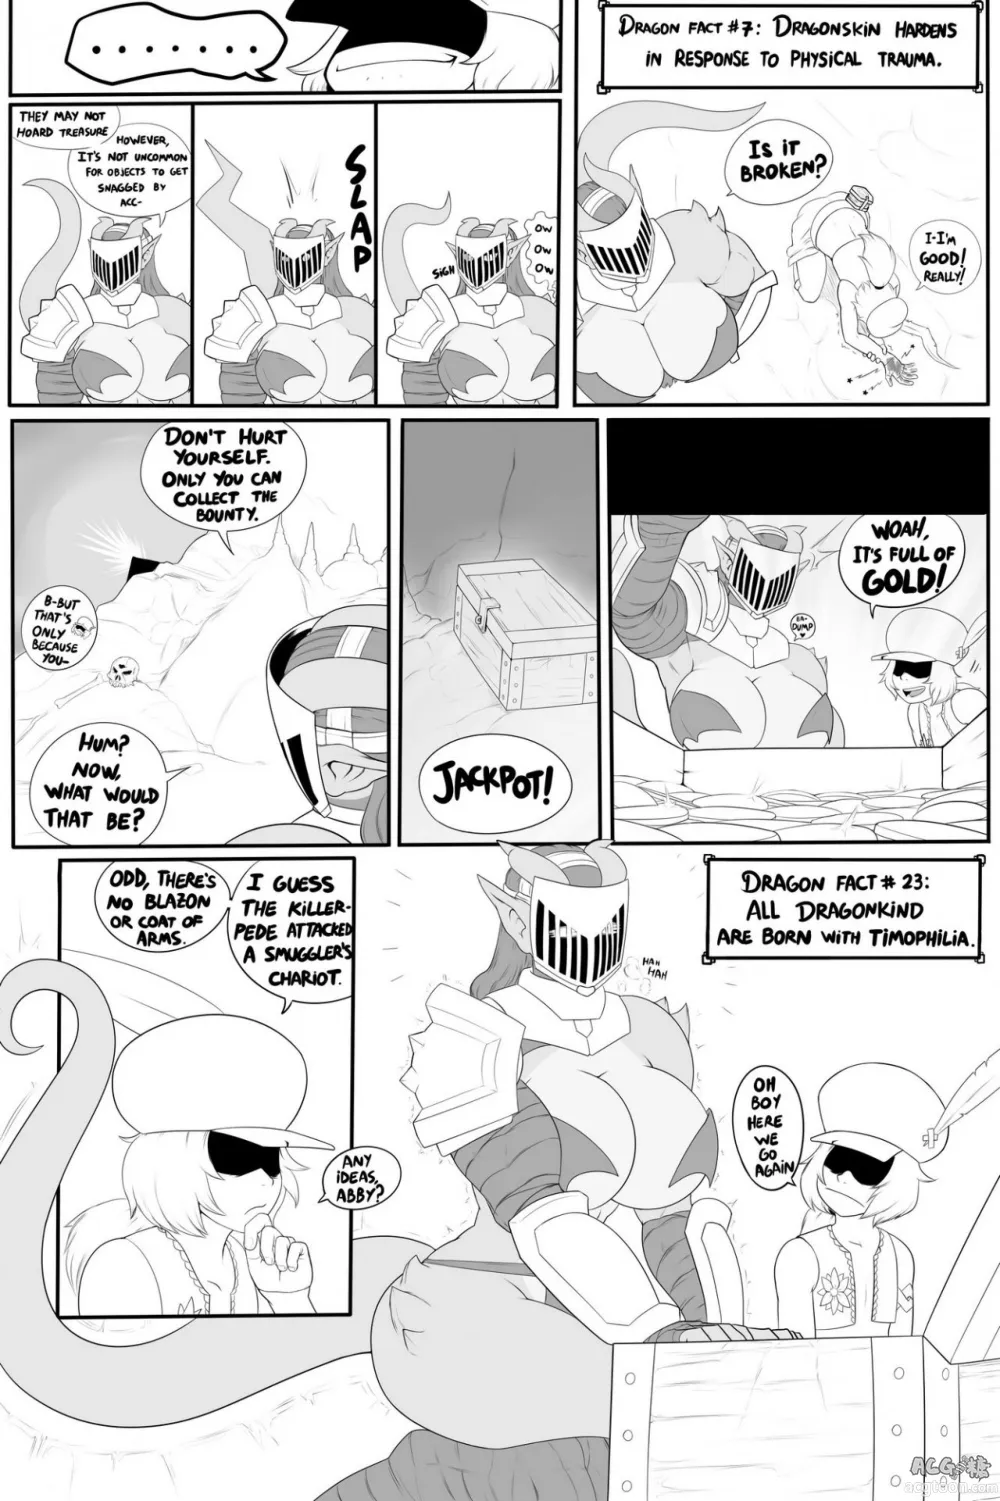 Dragonspawn - Page 5